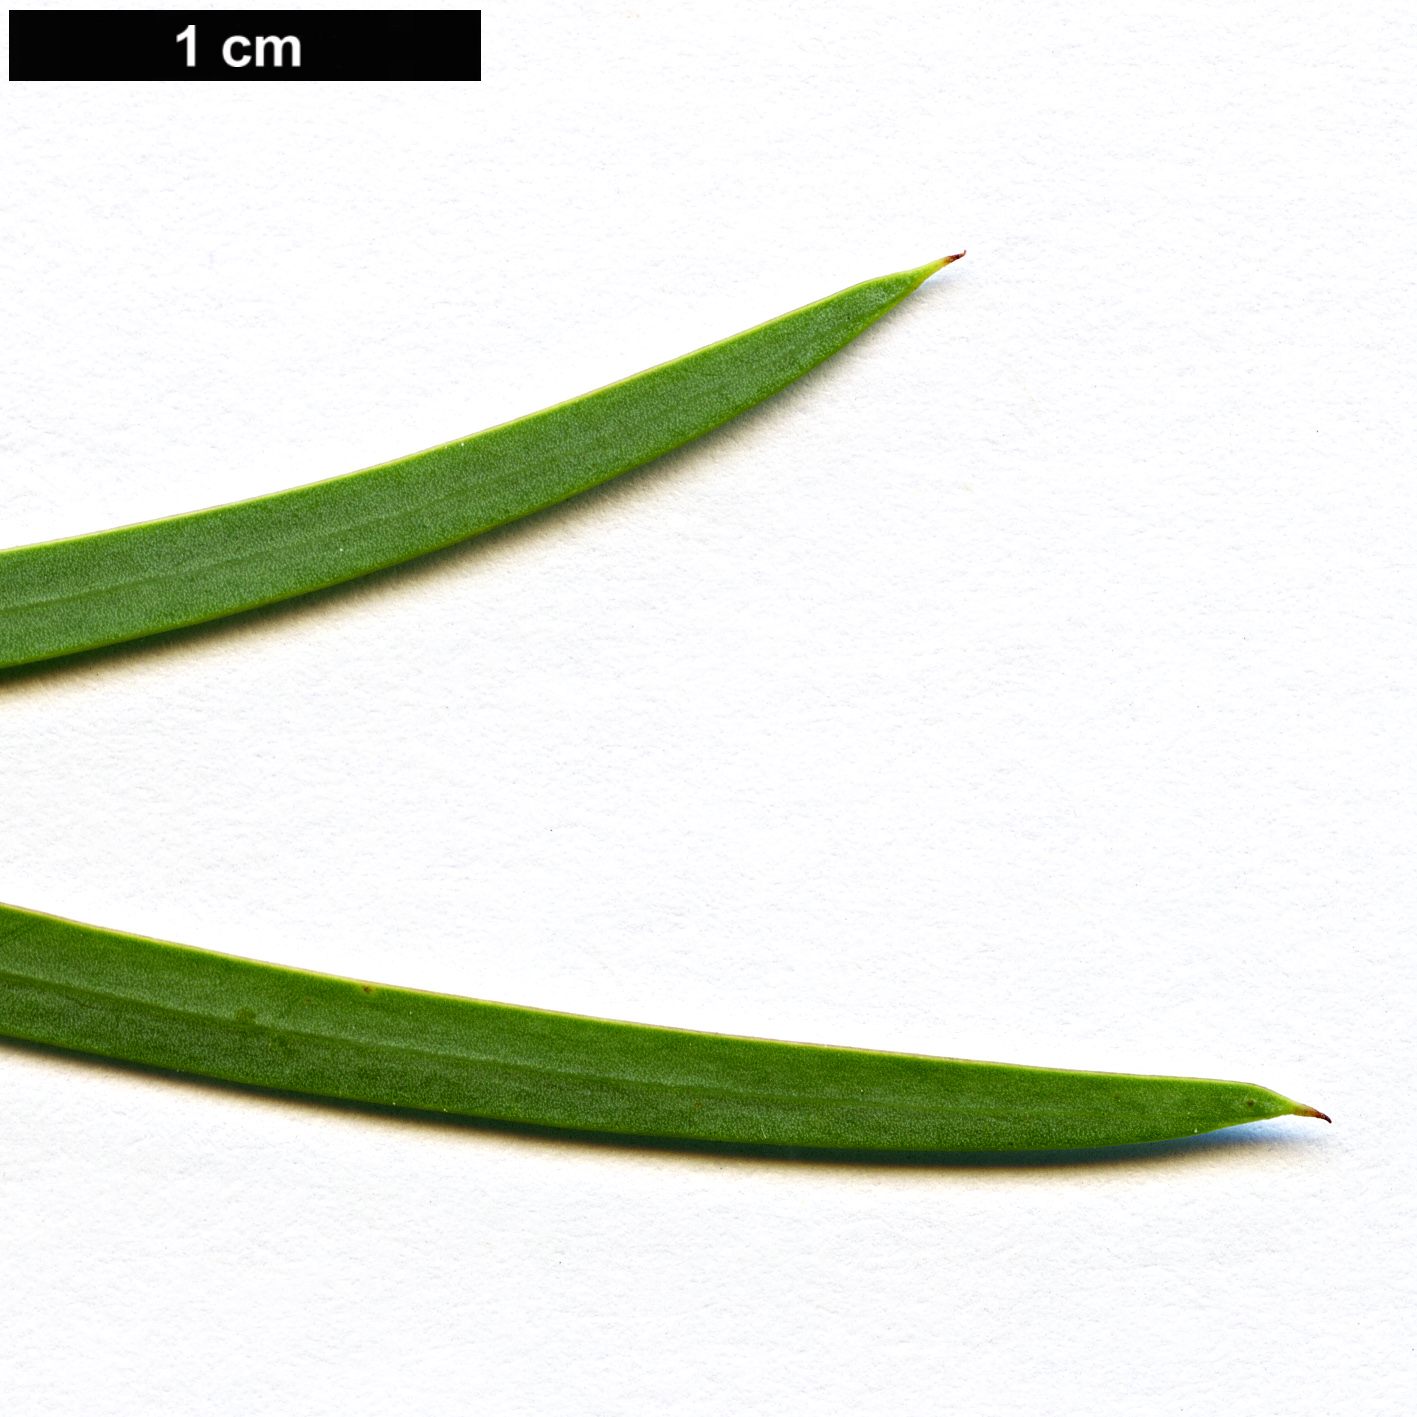 High resolution image: Family: Fabaceae - Genus: Acacia - Taxon: iteaphylla